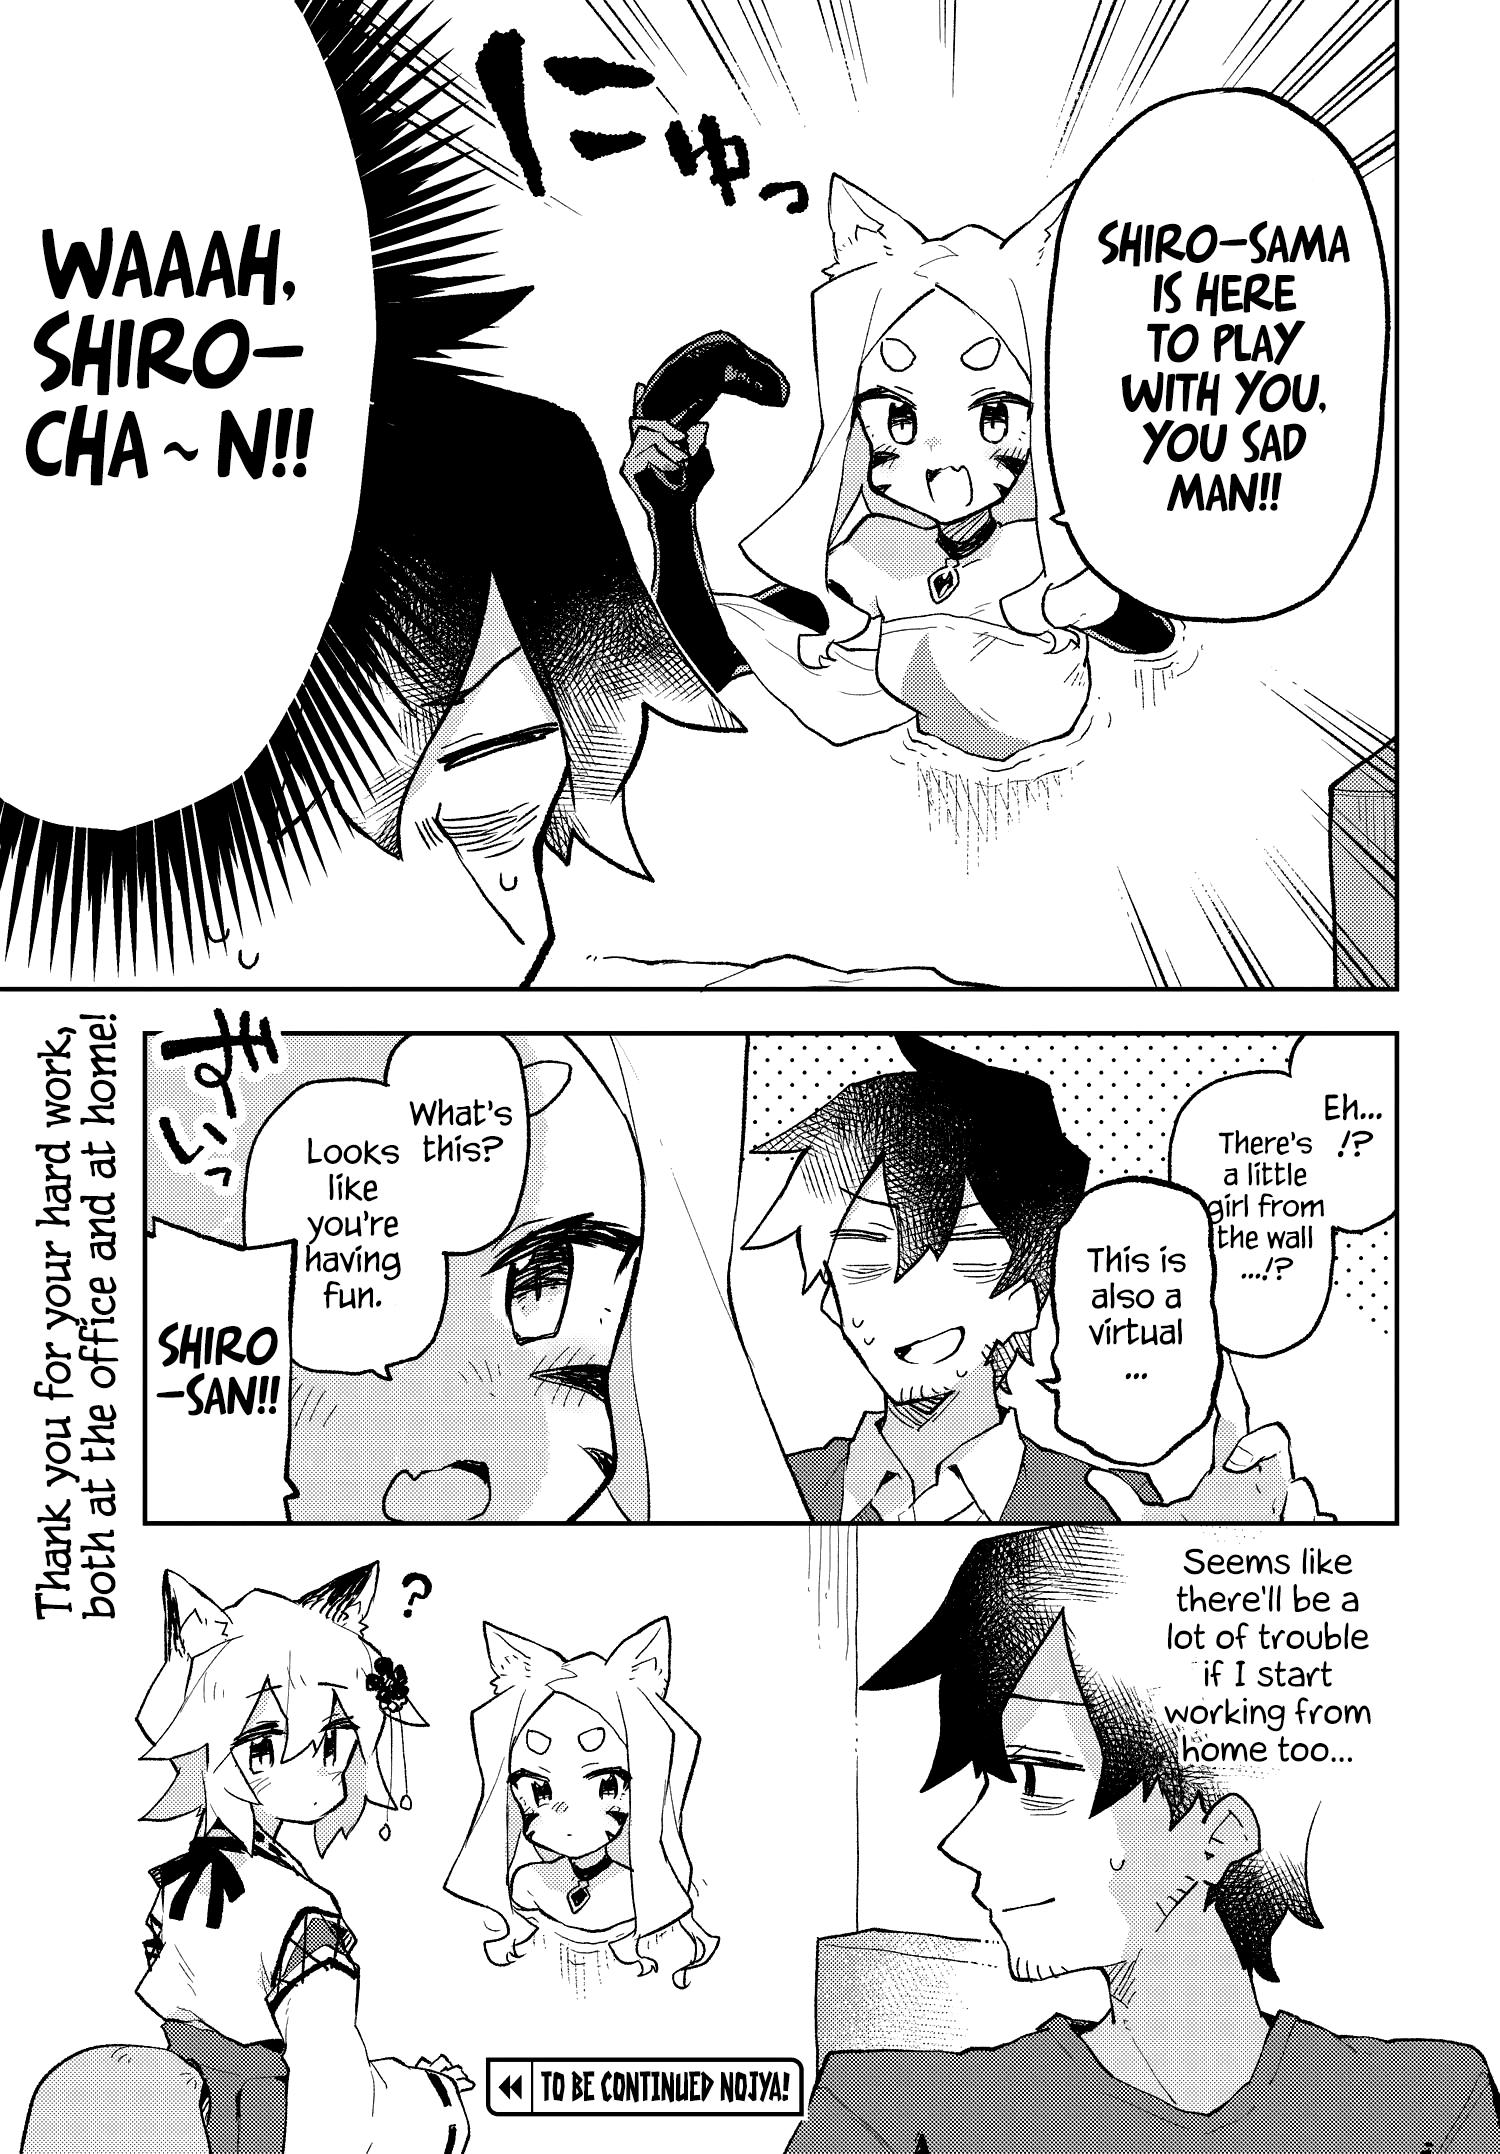 Sewayaki Kitsune No Senko-San Chapter 54.5: Special Stay Home Chapter page 3 - Mangakakalot